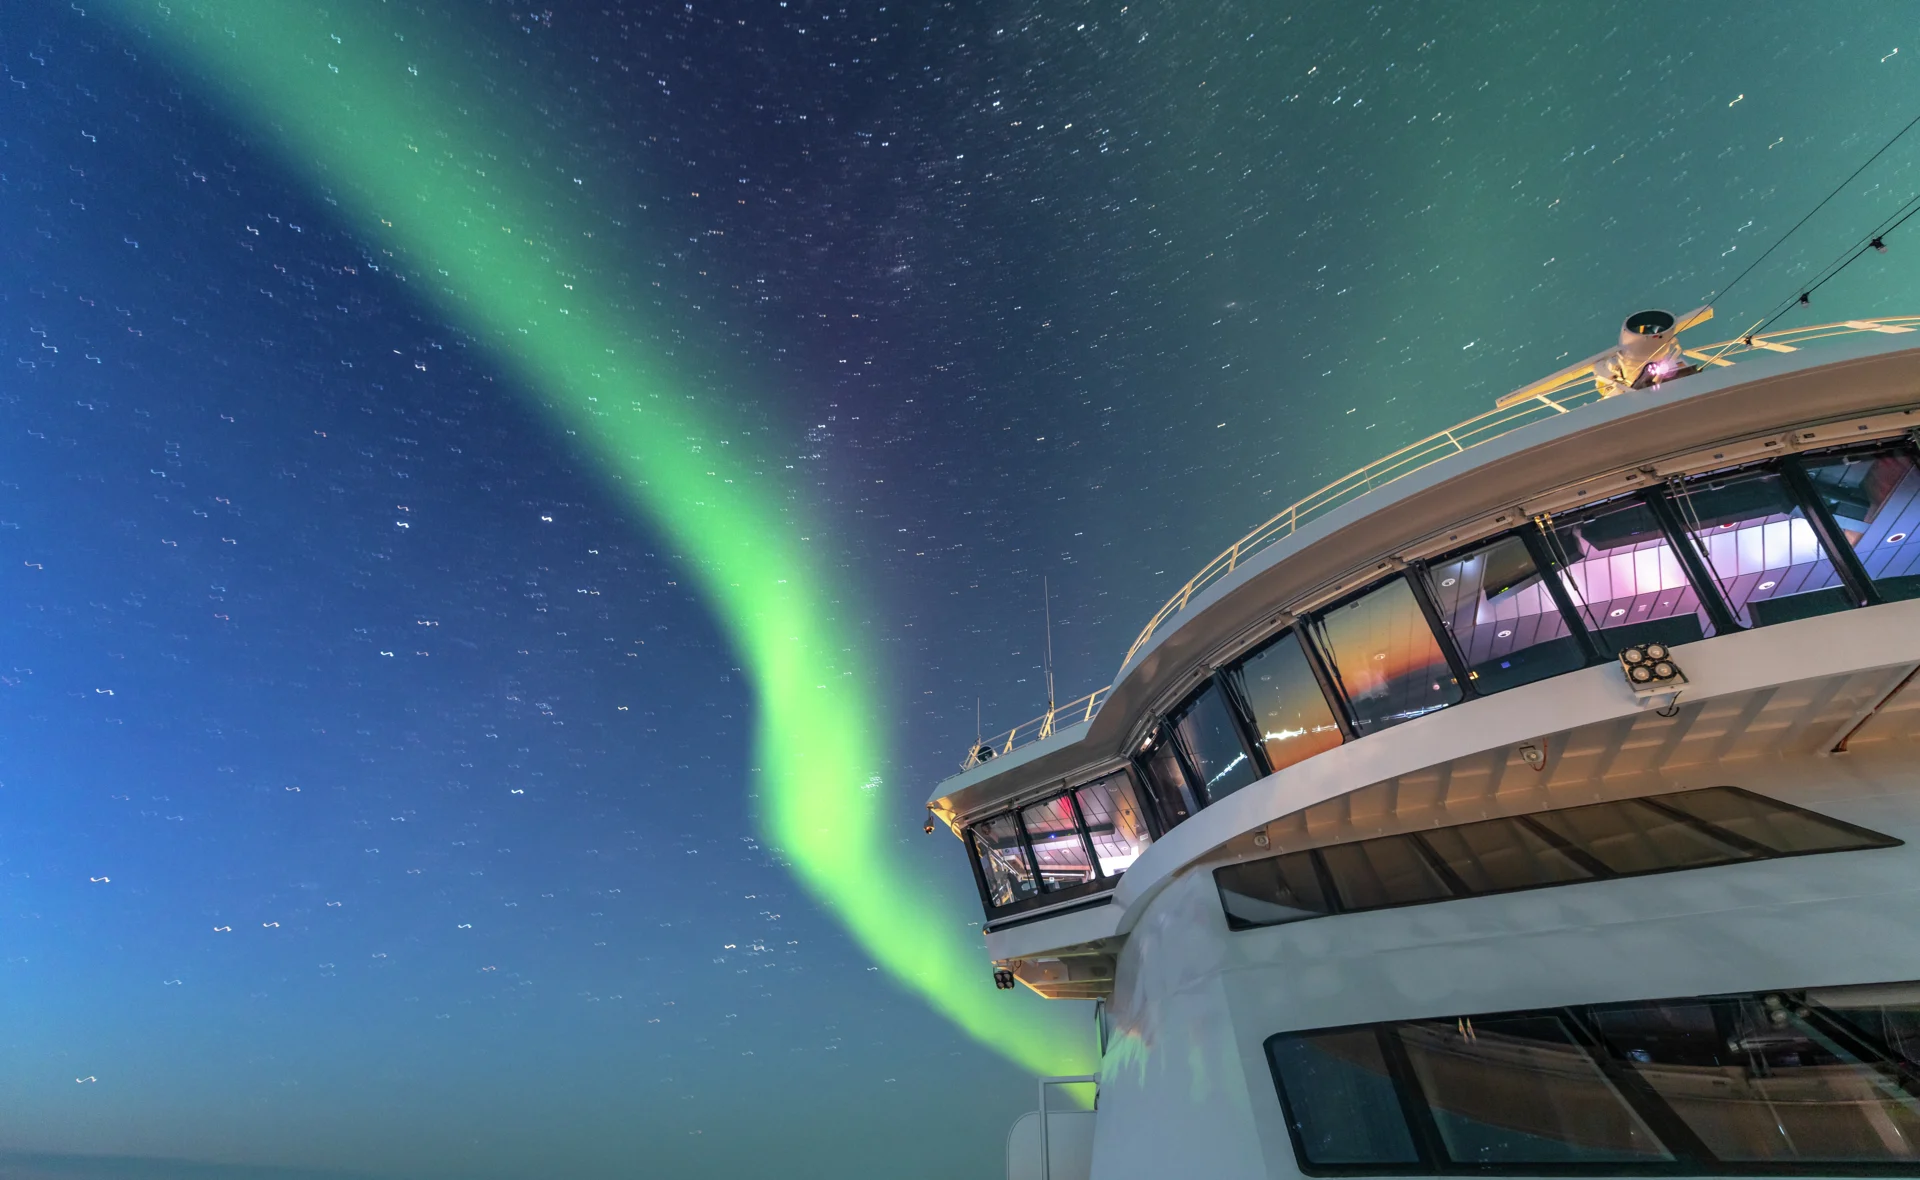 The Northern Lights are dancing in the sky above the bridge of MS Roald Amundsen in Canada. Credit: Karsten Bidstrup.